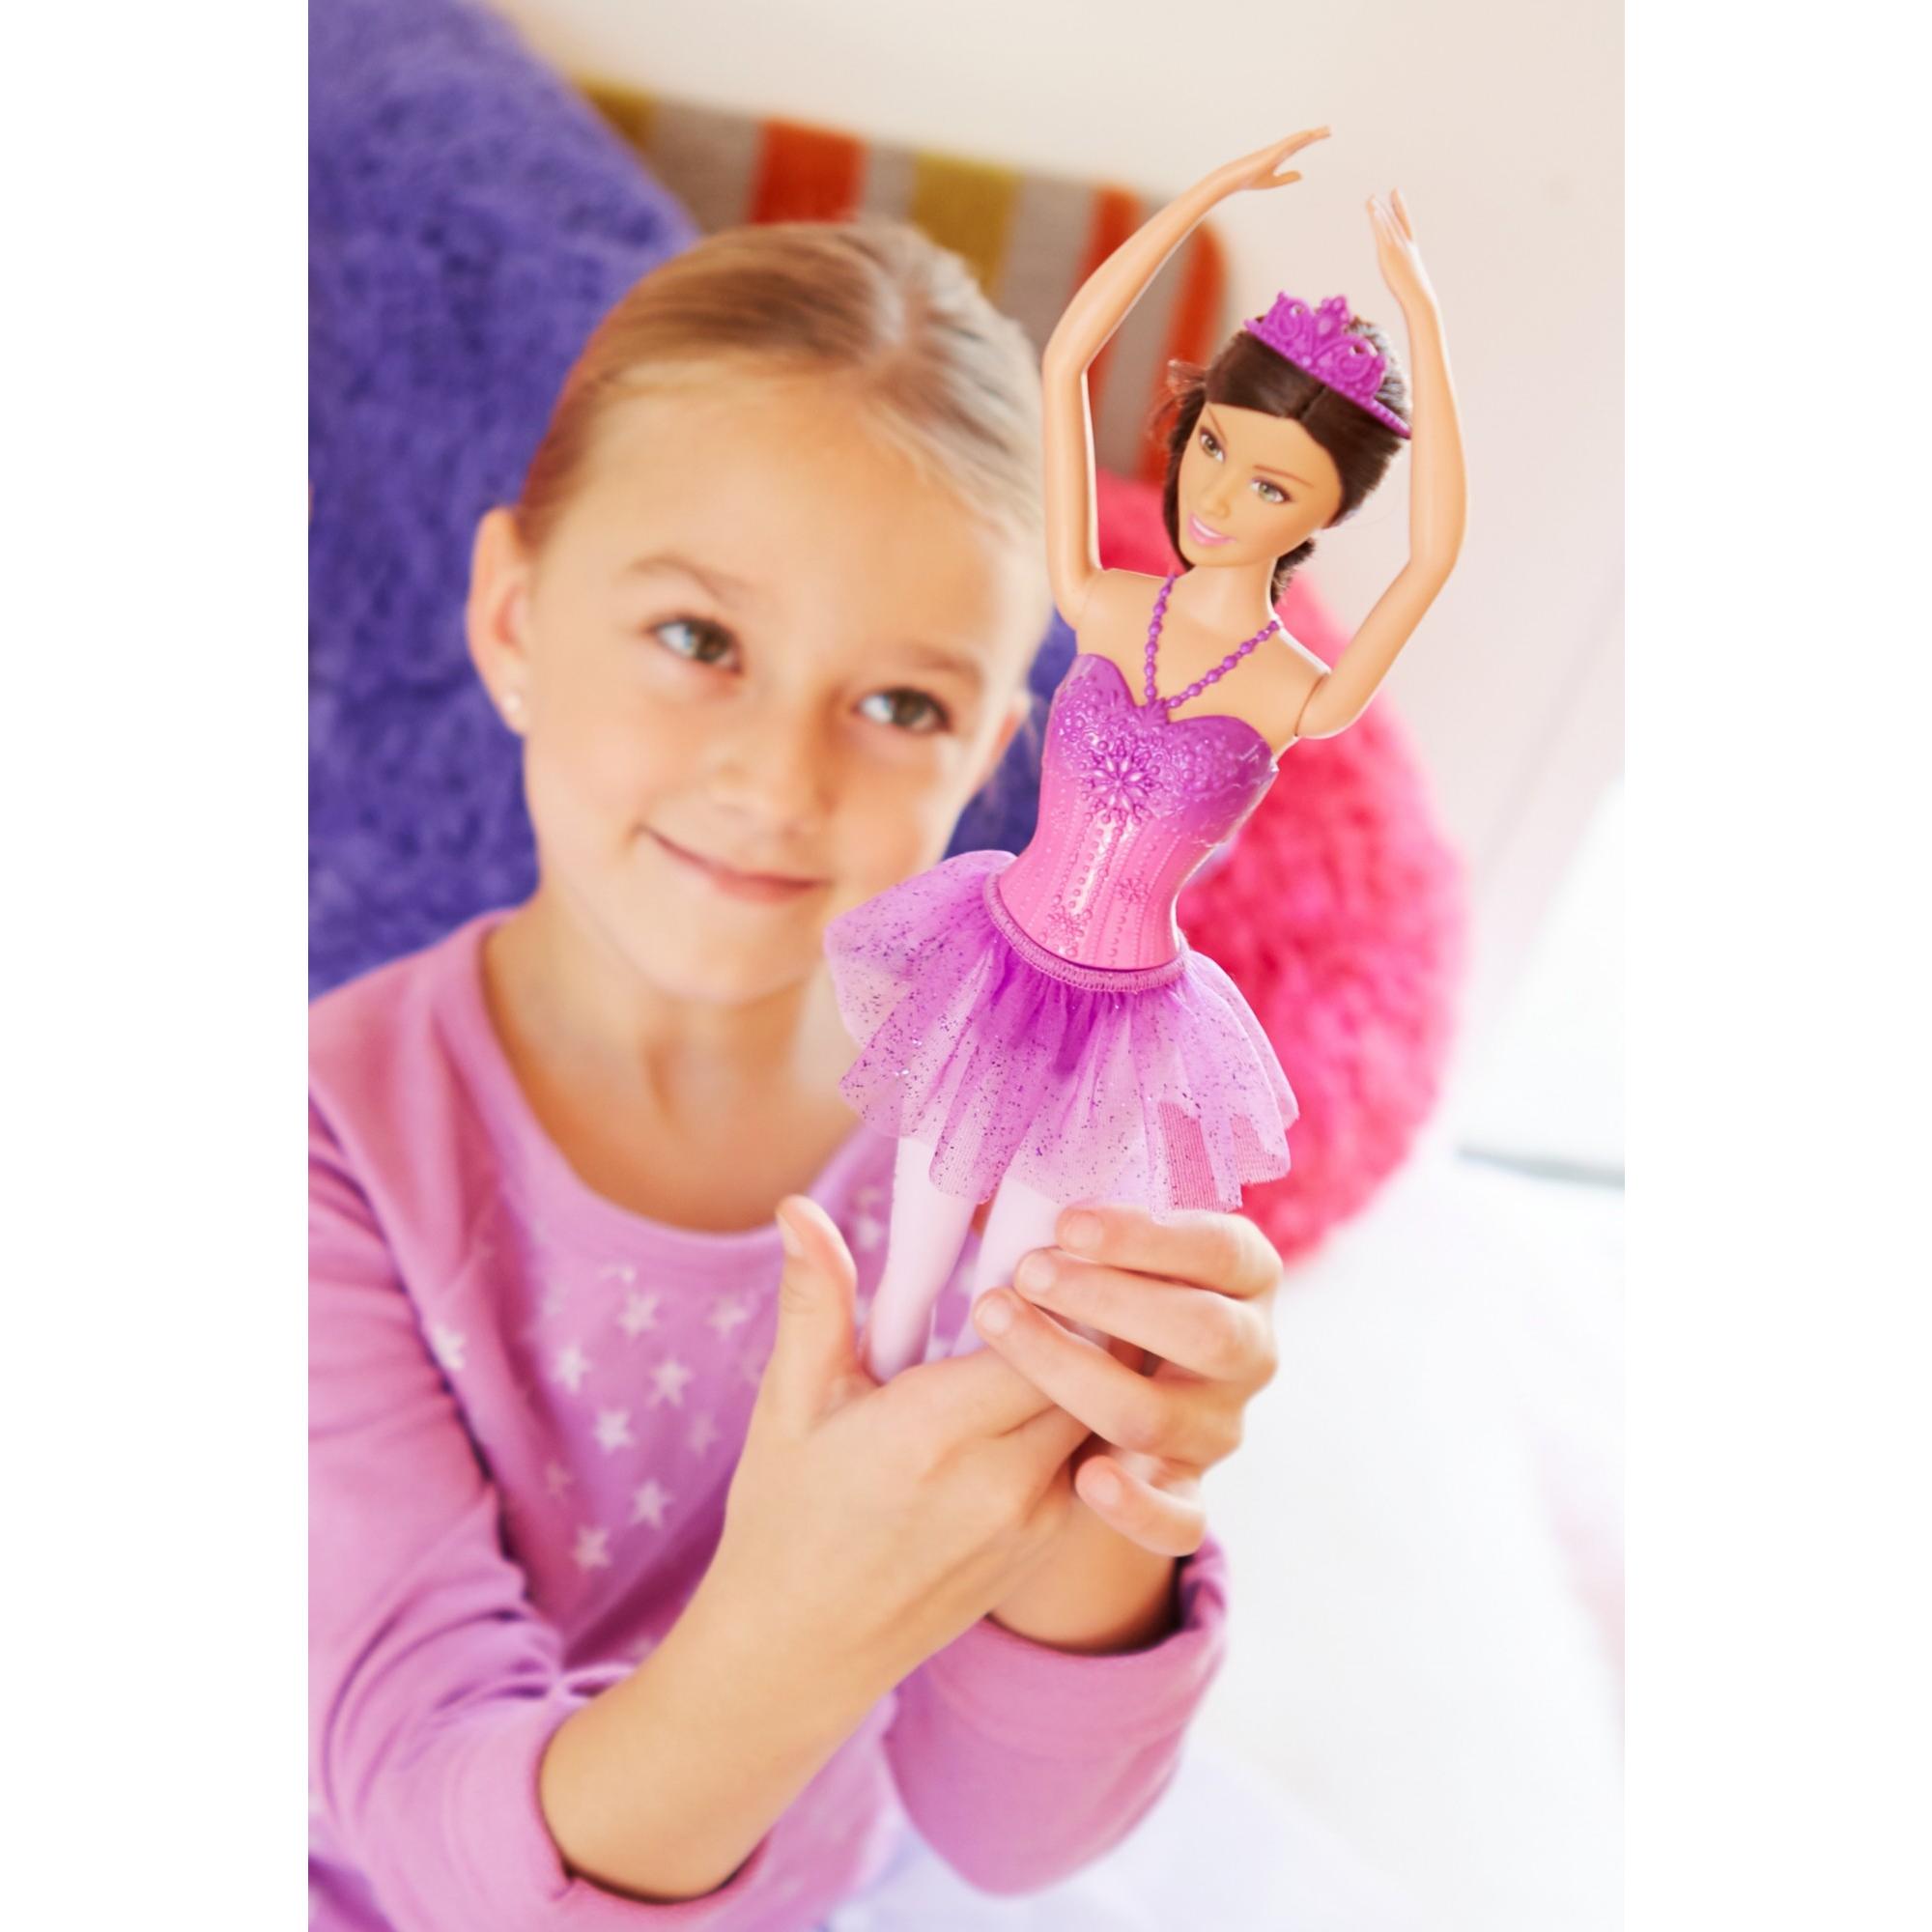 Barbie Ballerina Doll with Removable Purple Tutu & Tiara - image 2 of 6